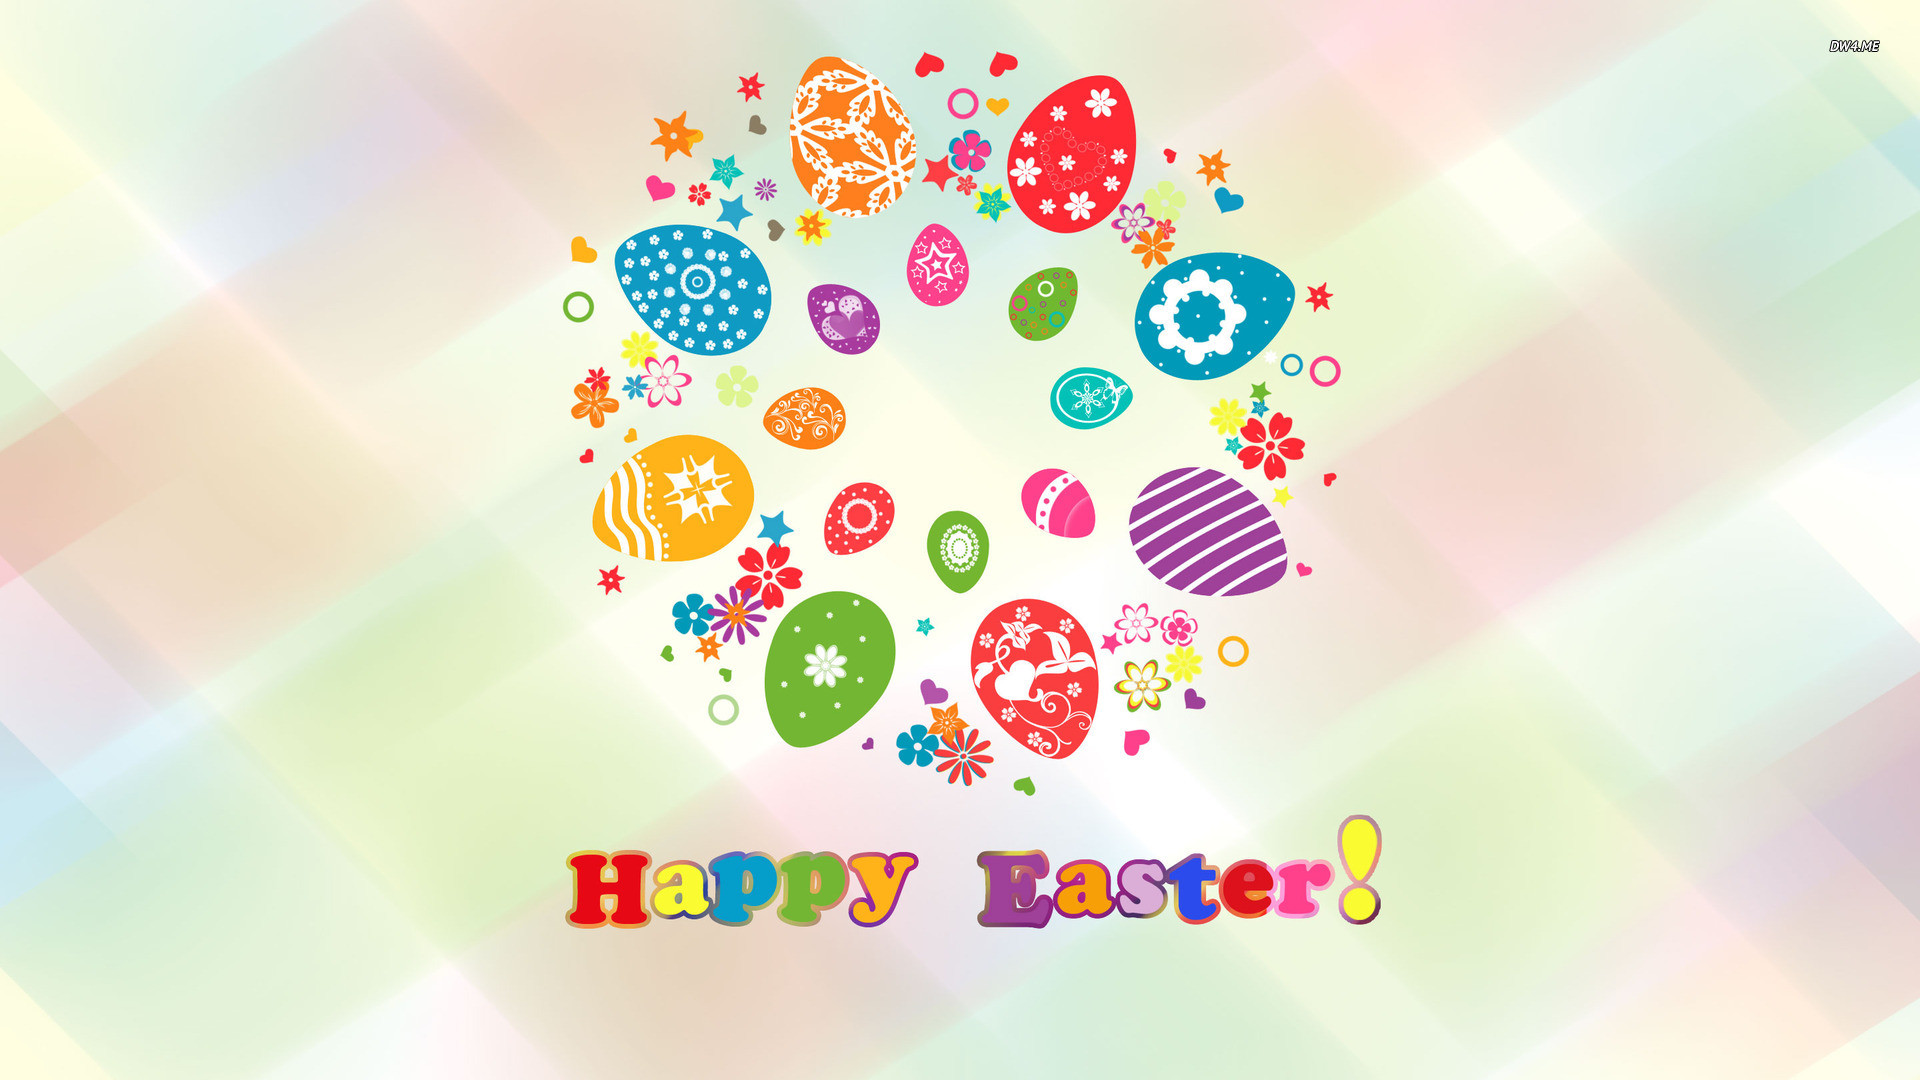 1920x1080 Happy Easter wallpaper - 818642